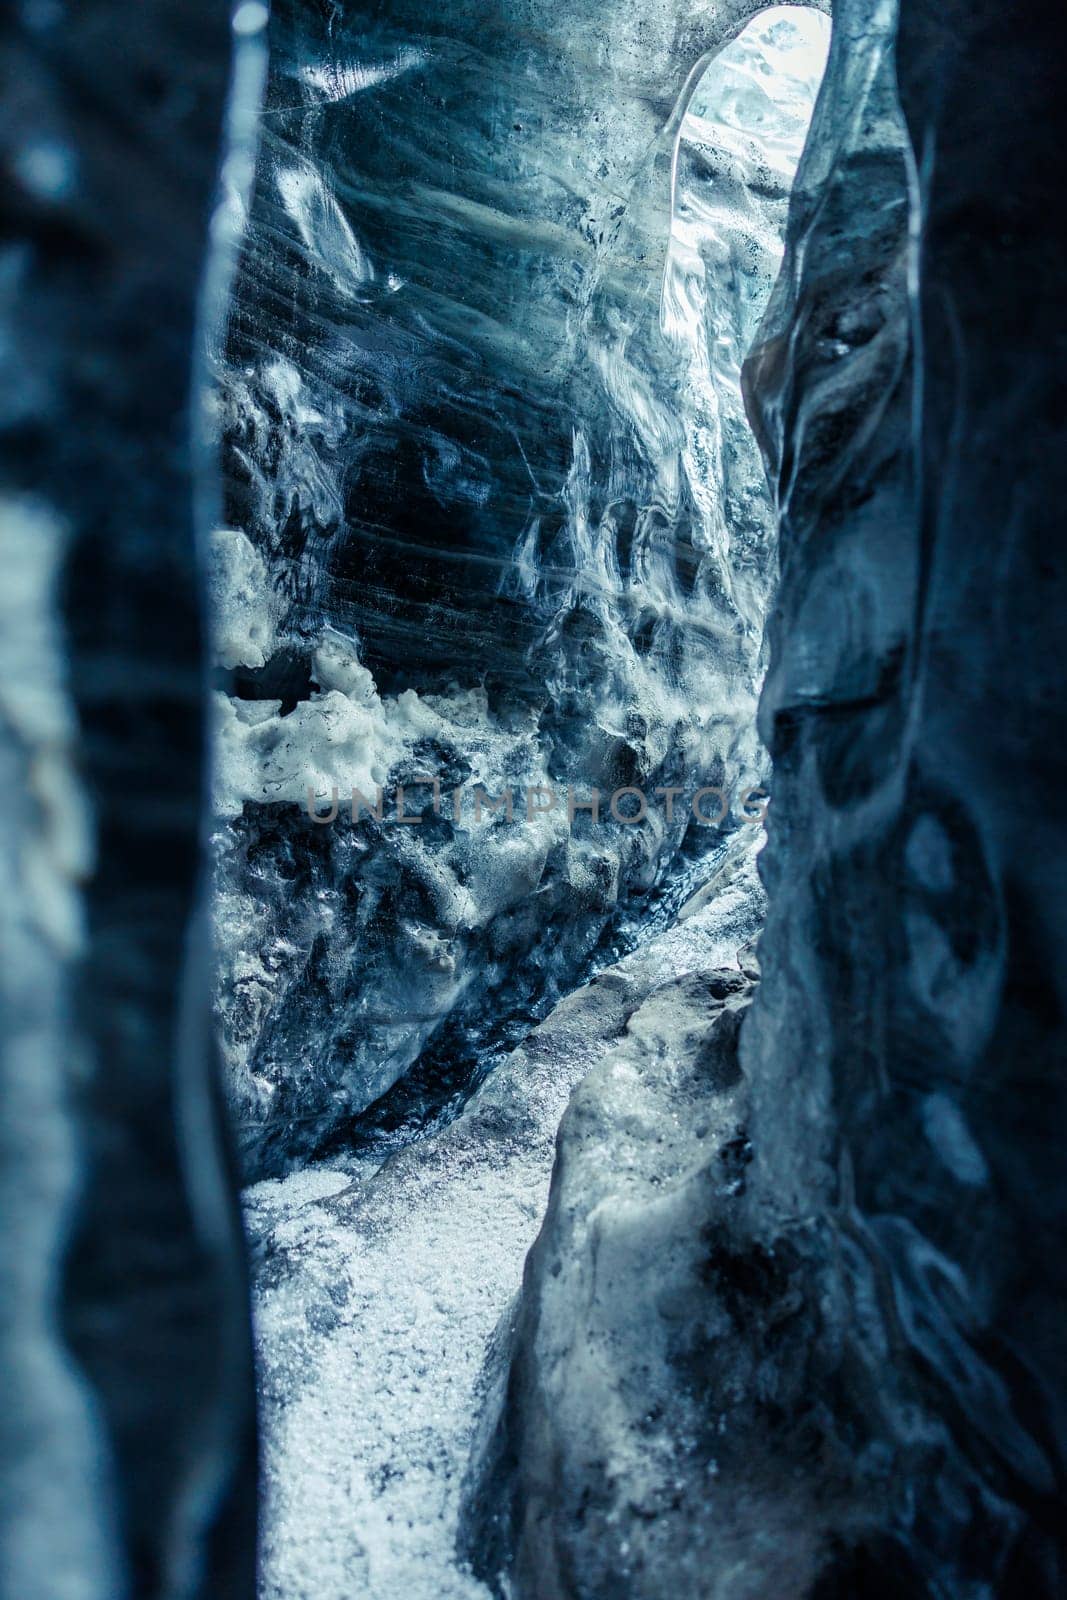 Ice rocks melting in iceland, global warming concept. Icy blocks with cracked transparent structure inside vatnajokull glacier crevasse, icelandic landscape in frosty ice caves.